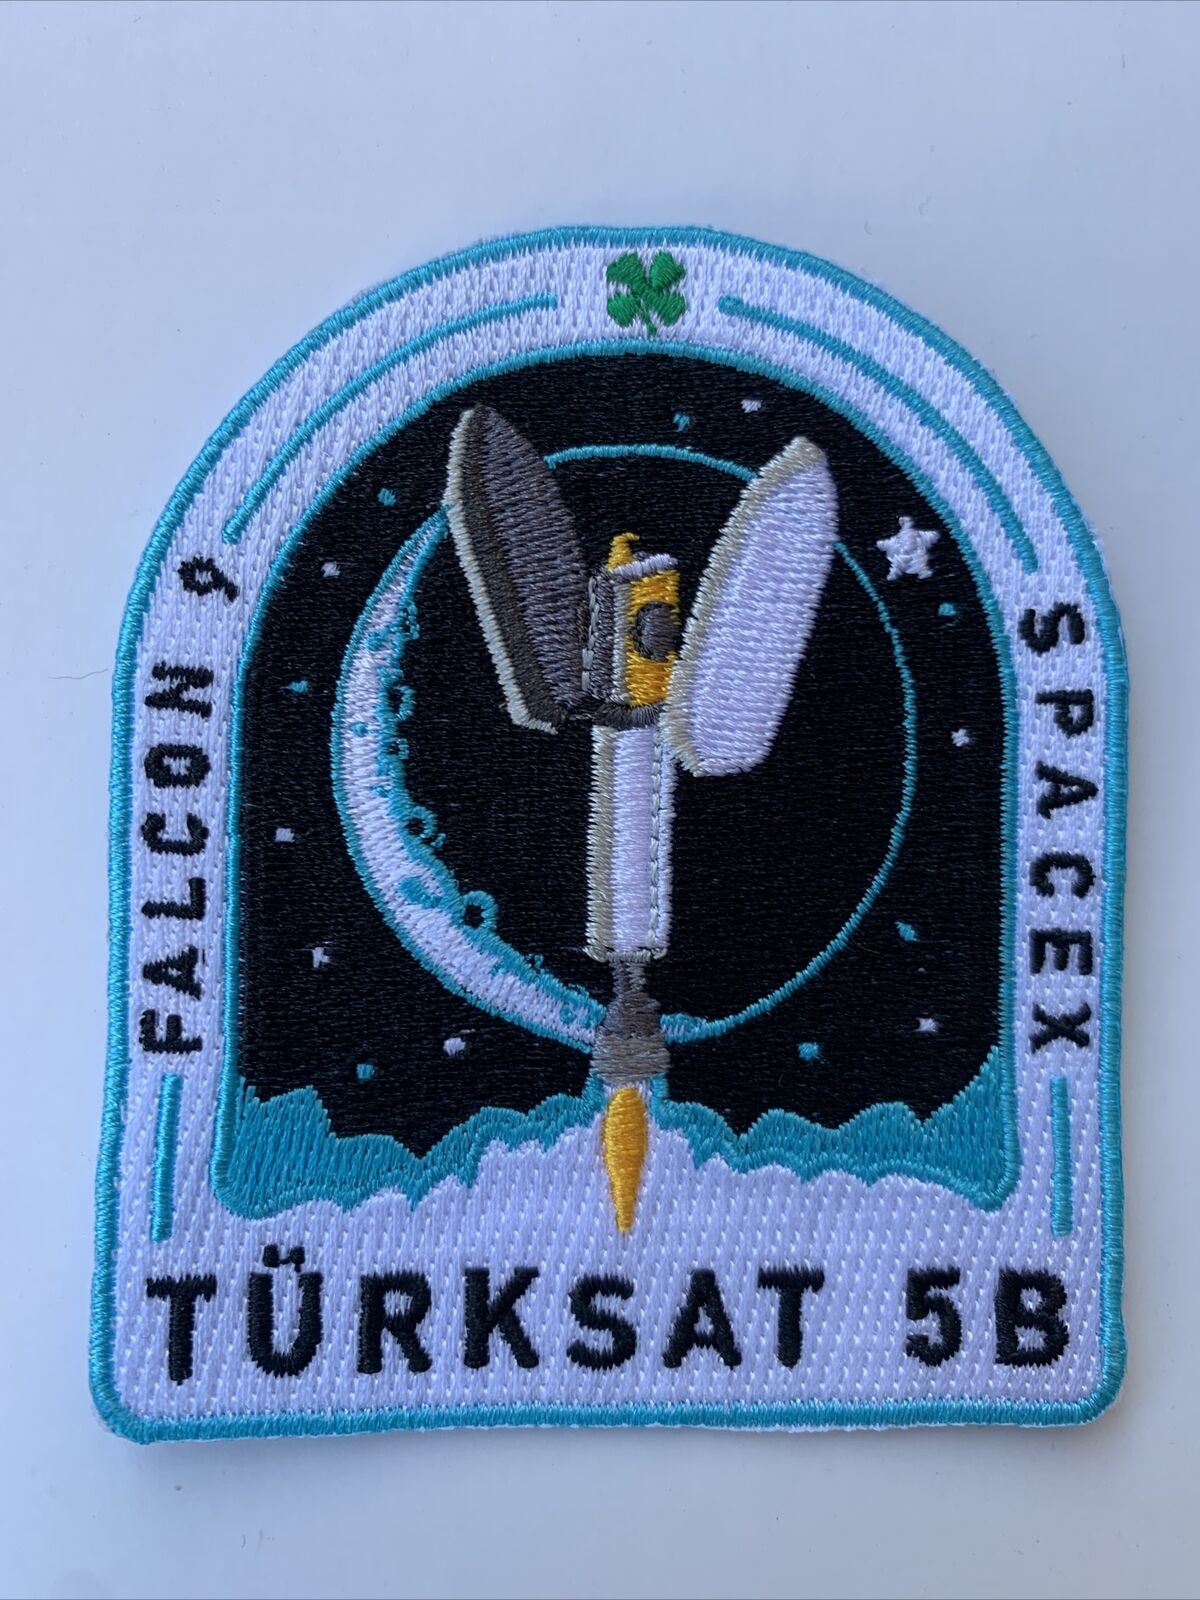 Original SPACEX TURKSAT 5B MISSION PATCH FALCON 9